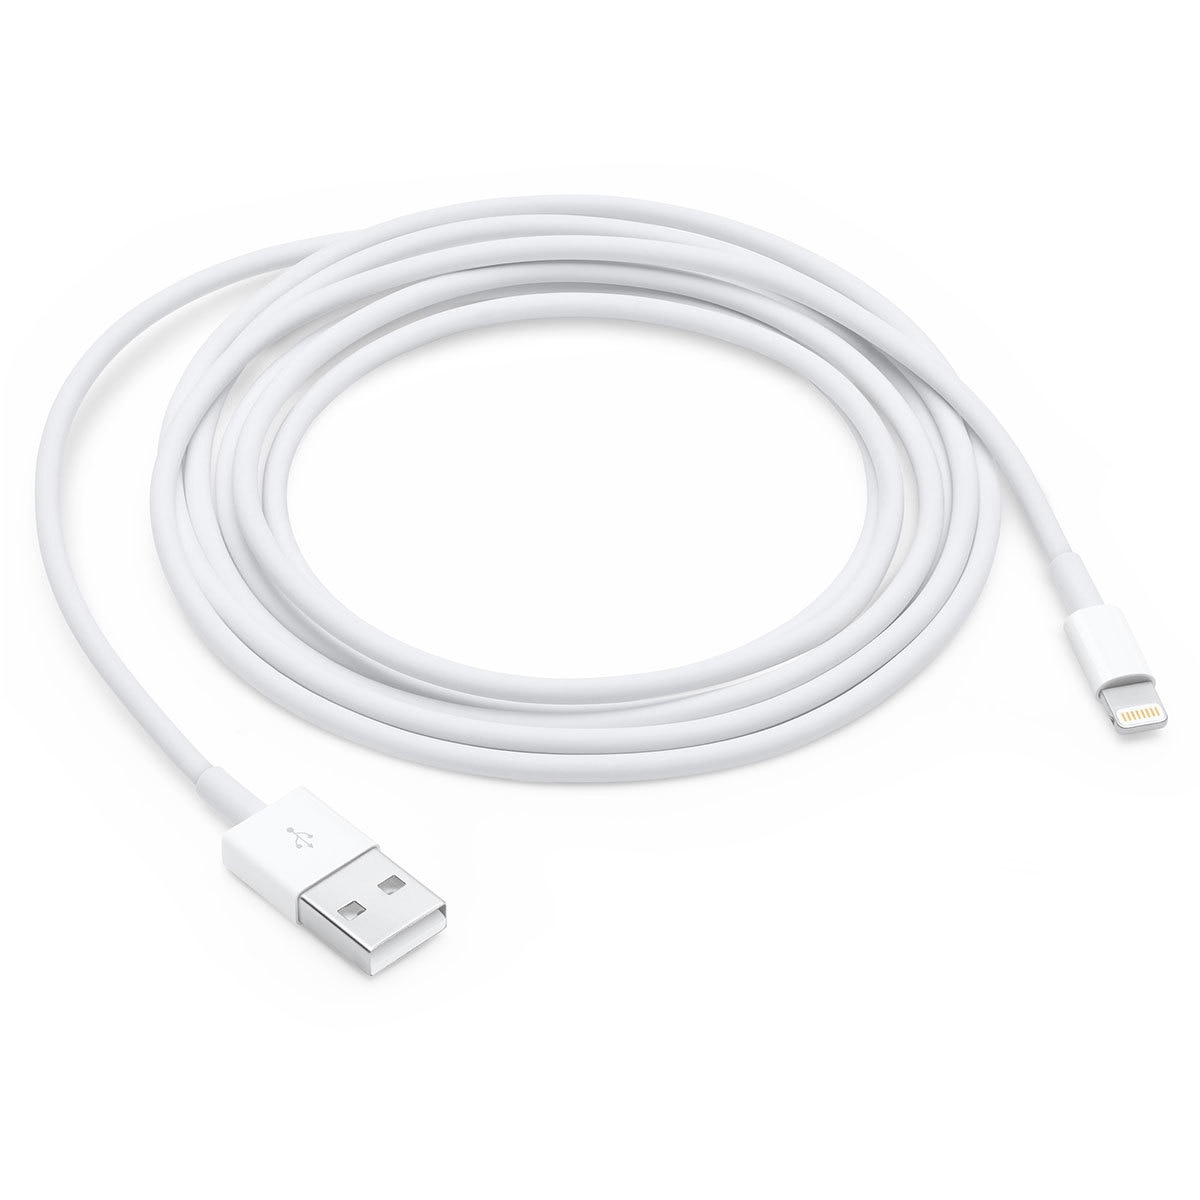 Apple cable de Lightning a USB (2 m)